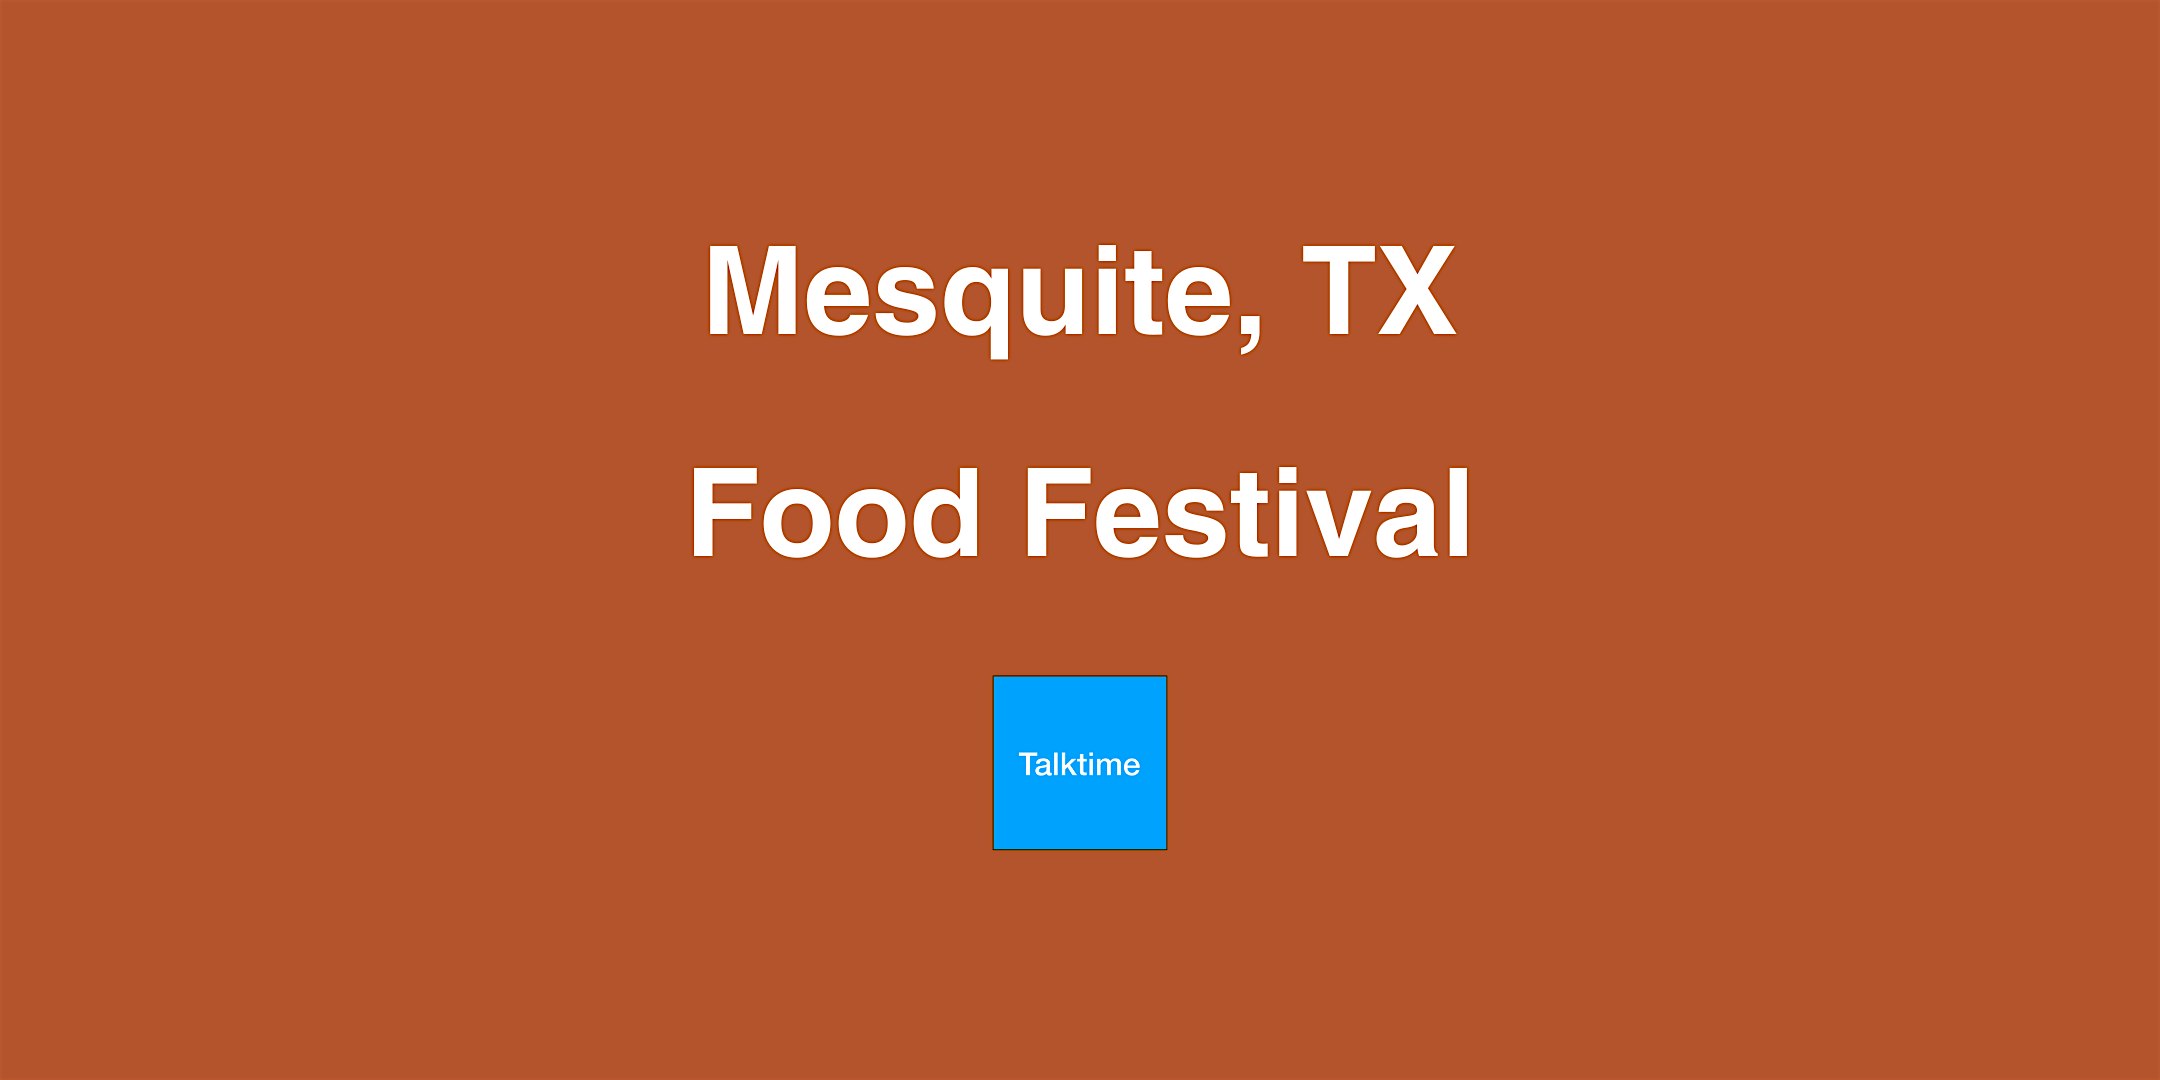 Food Festival - Mesquite